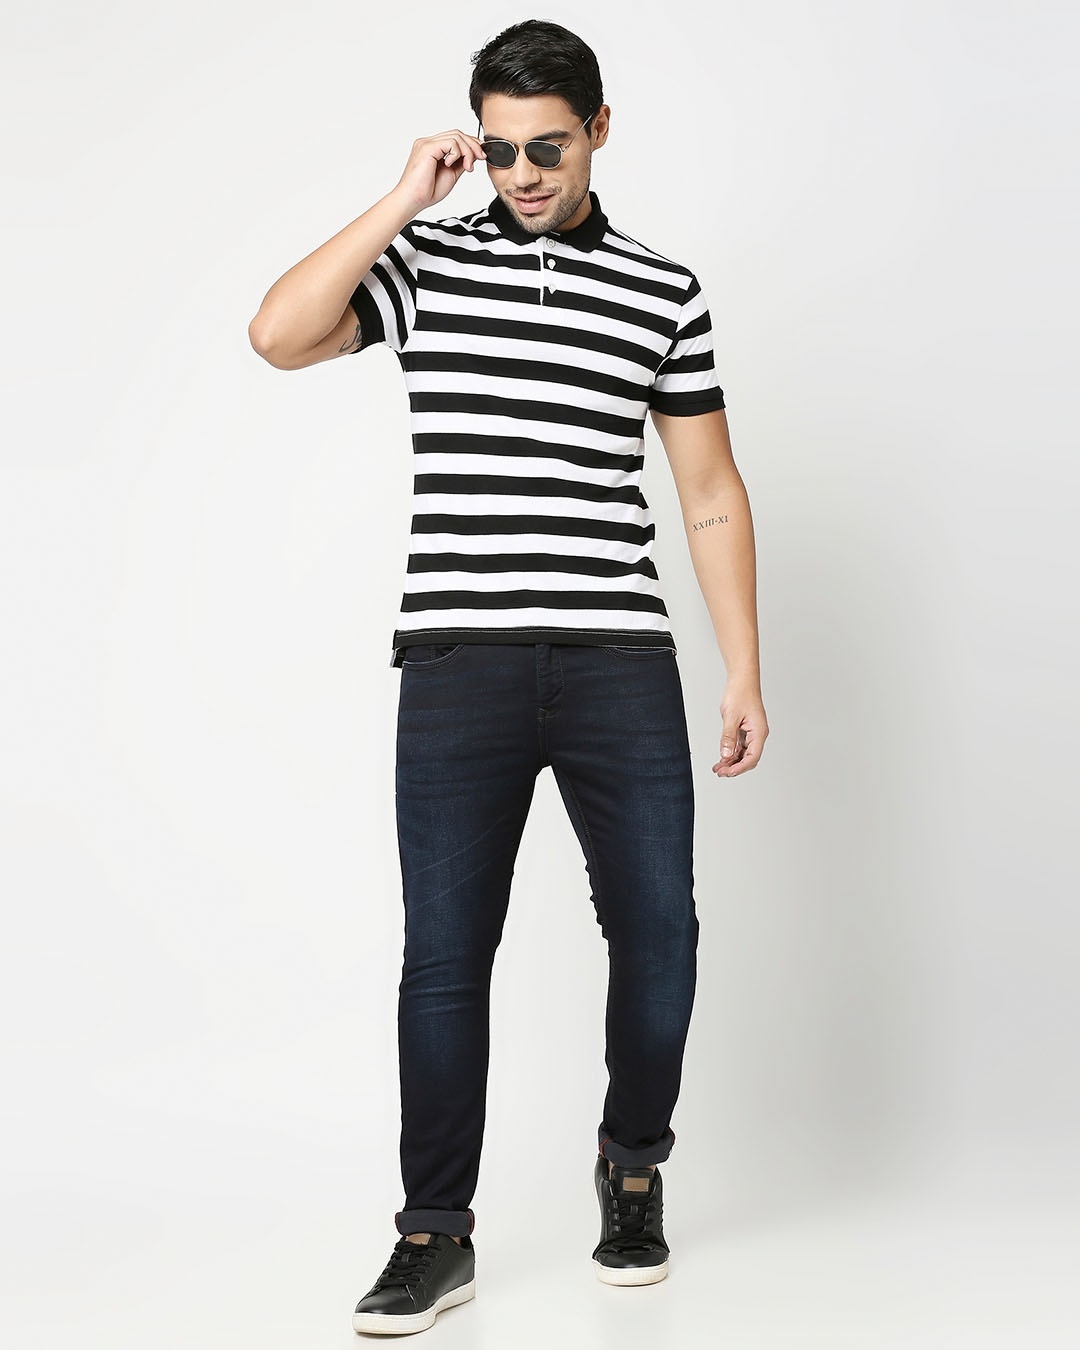 Shop Black & WhiteHalf Sleeve Stripes Polo